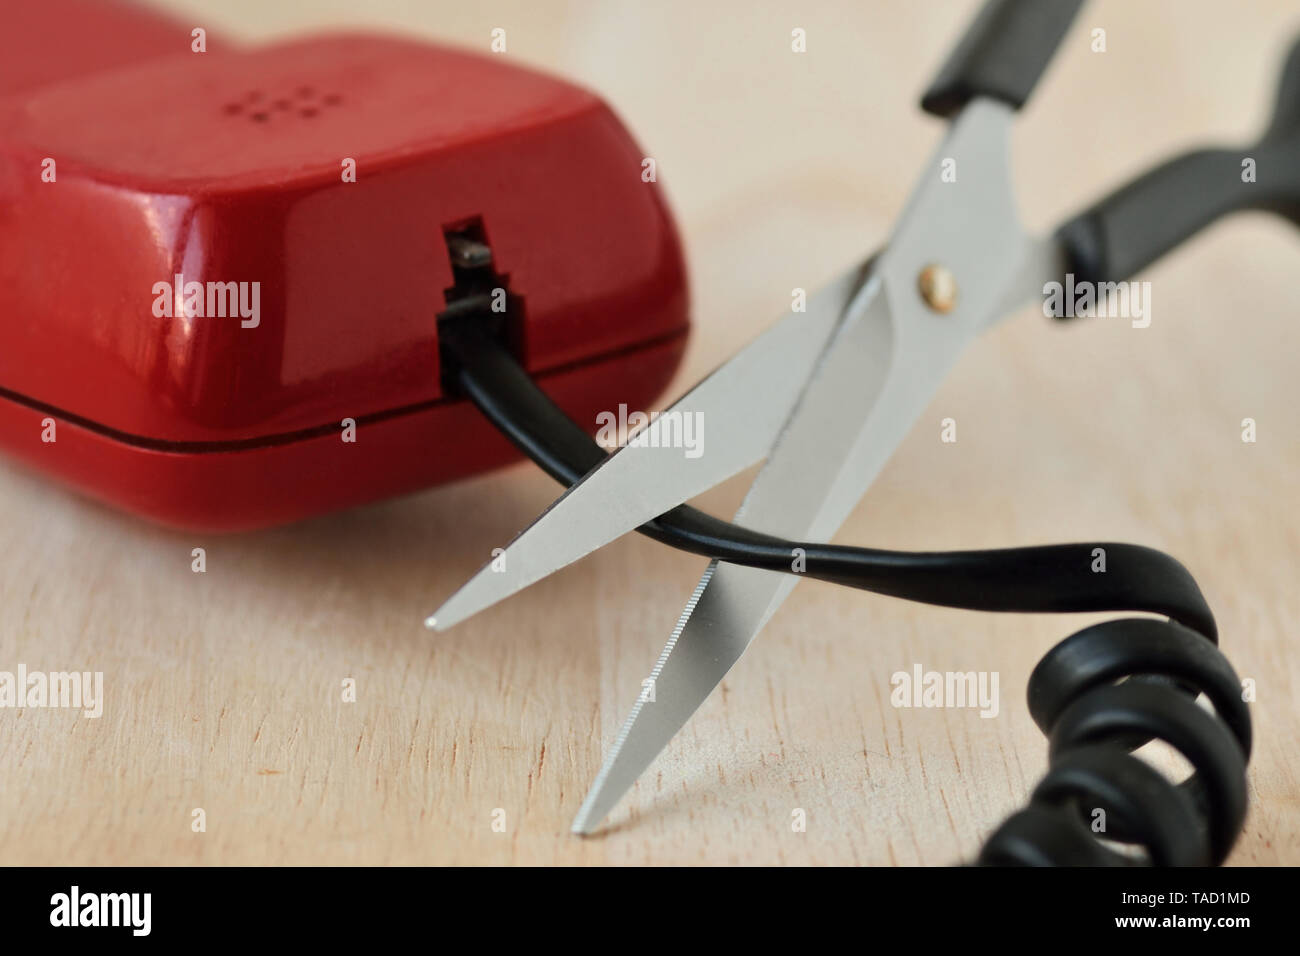 Scissors cutting telephone cord - Concept of landline phone Stock Photo